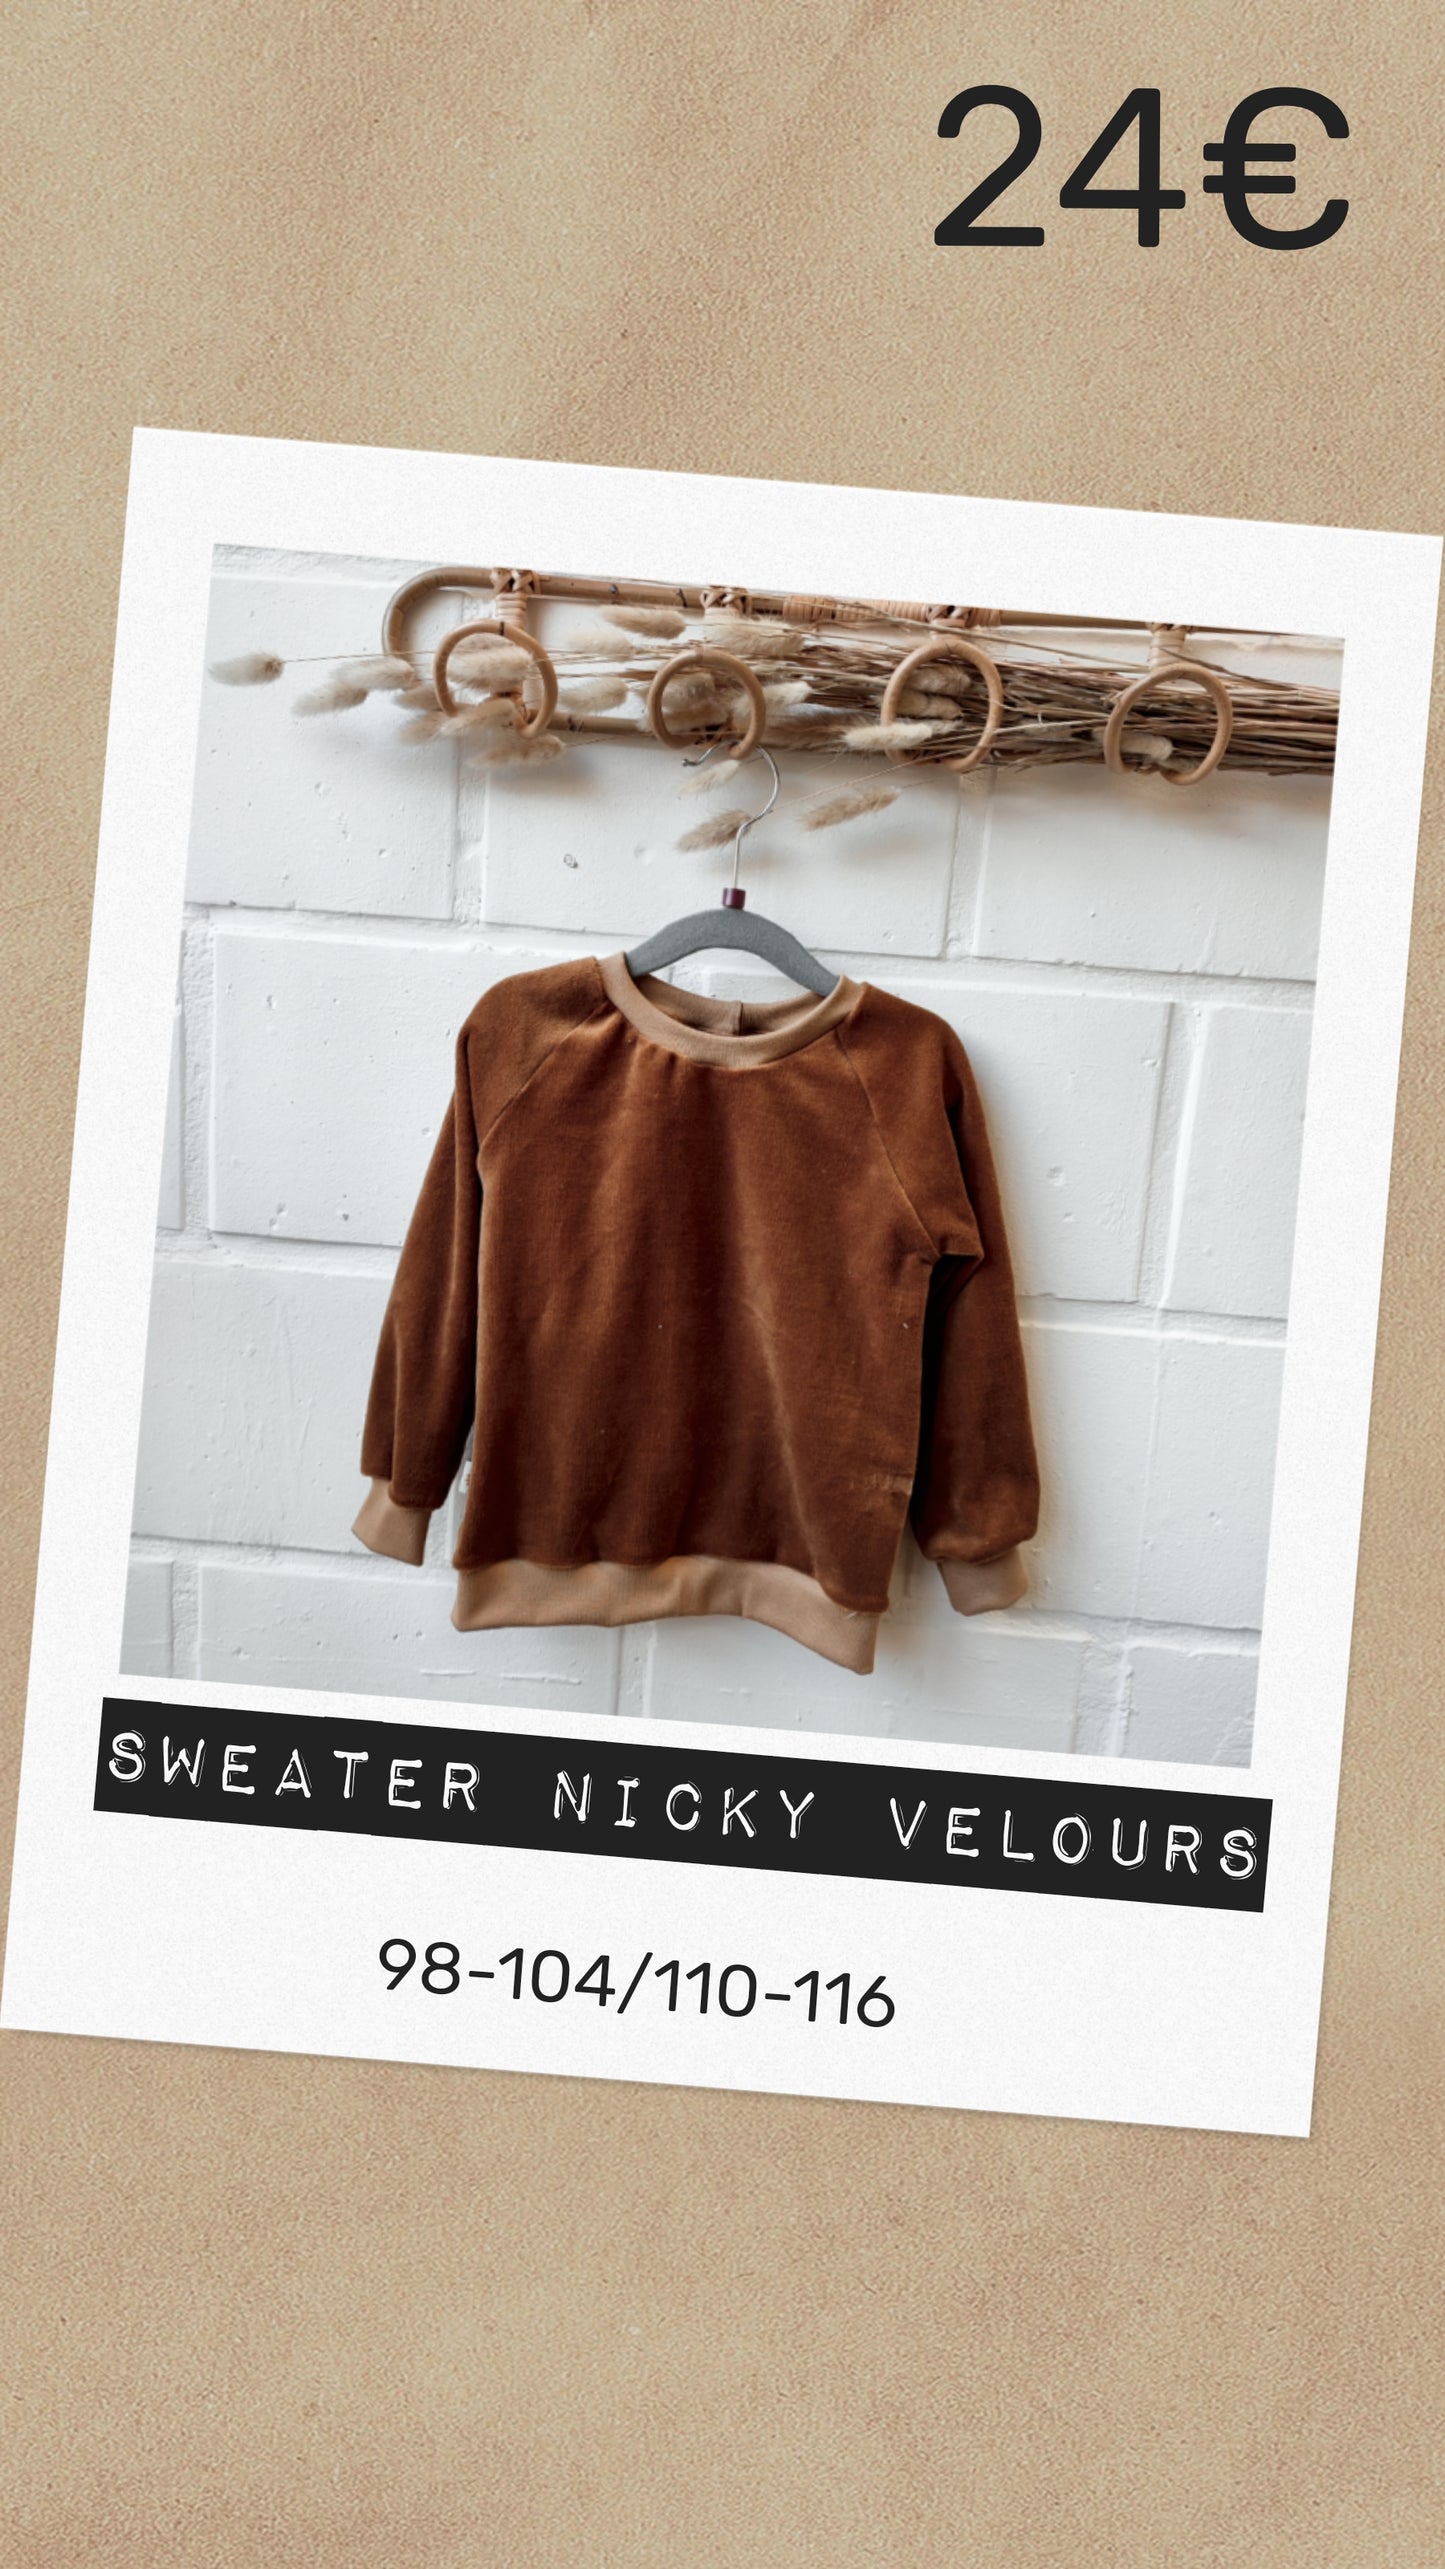 Sweater nicky velours